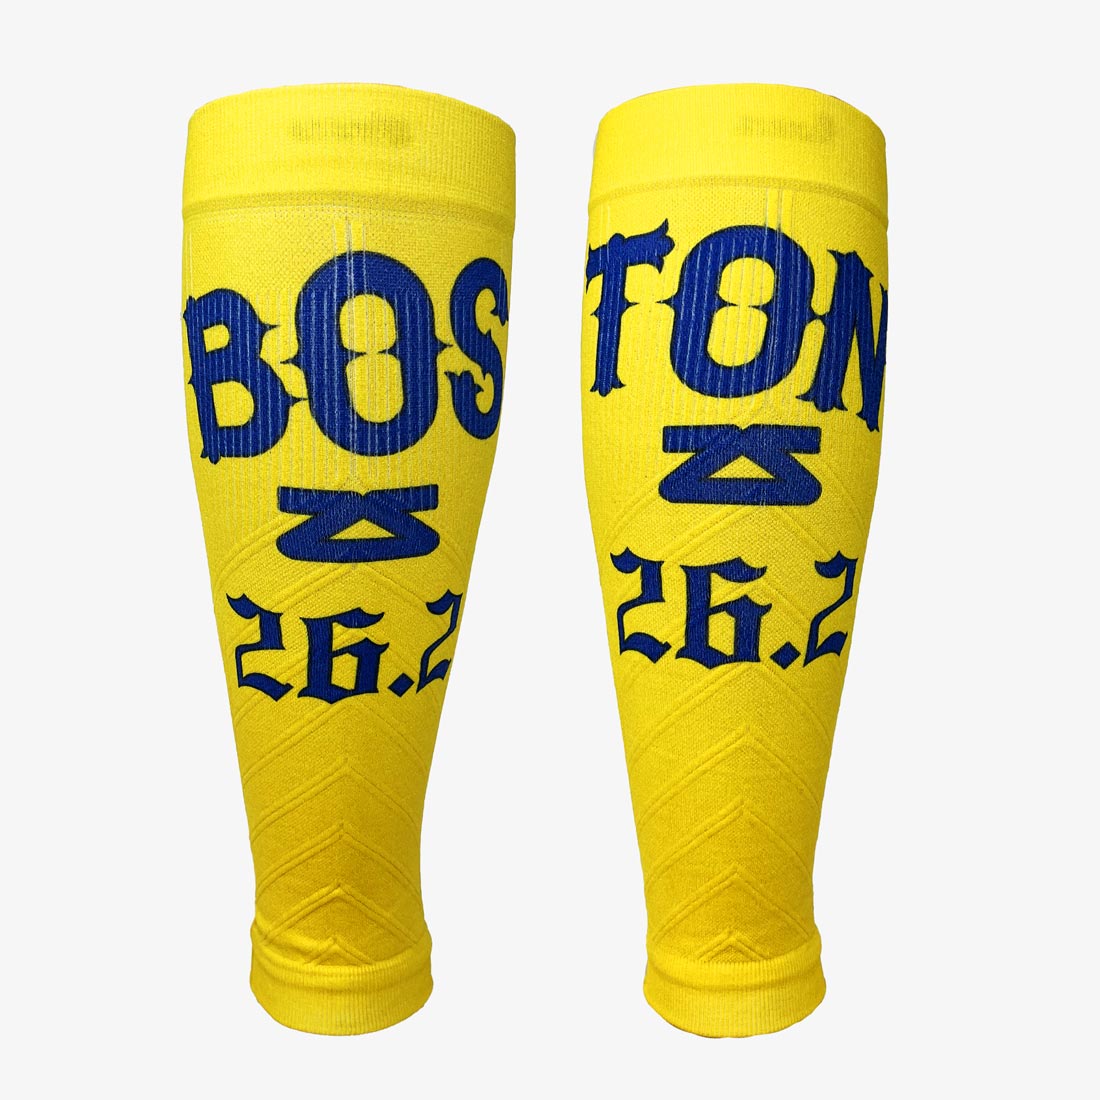 Classic Boston 26.2 Compression Leg SleevesLeg Sleeves - Zensah